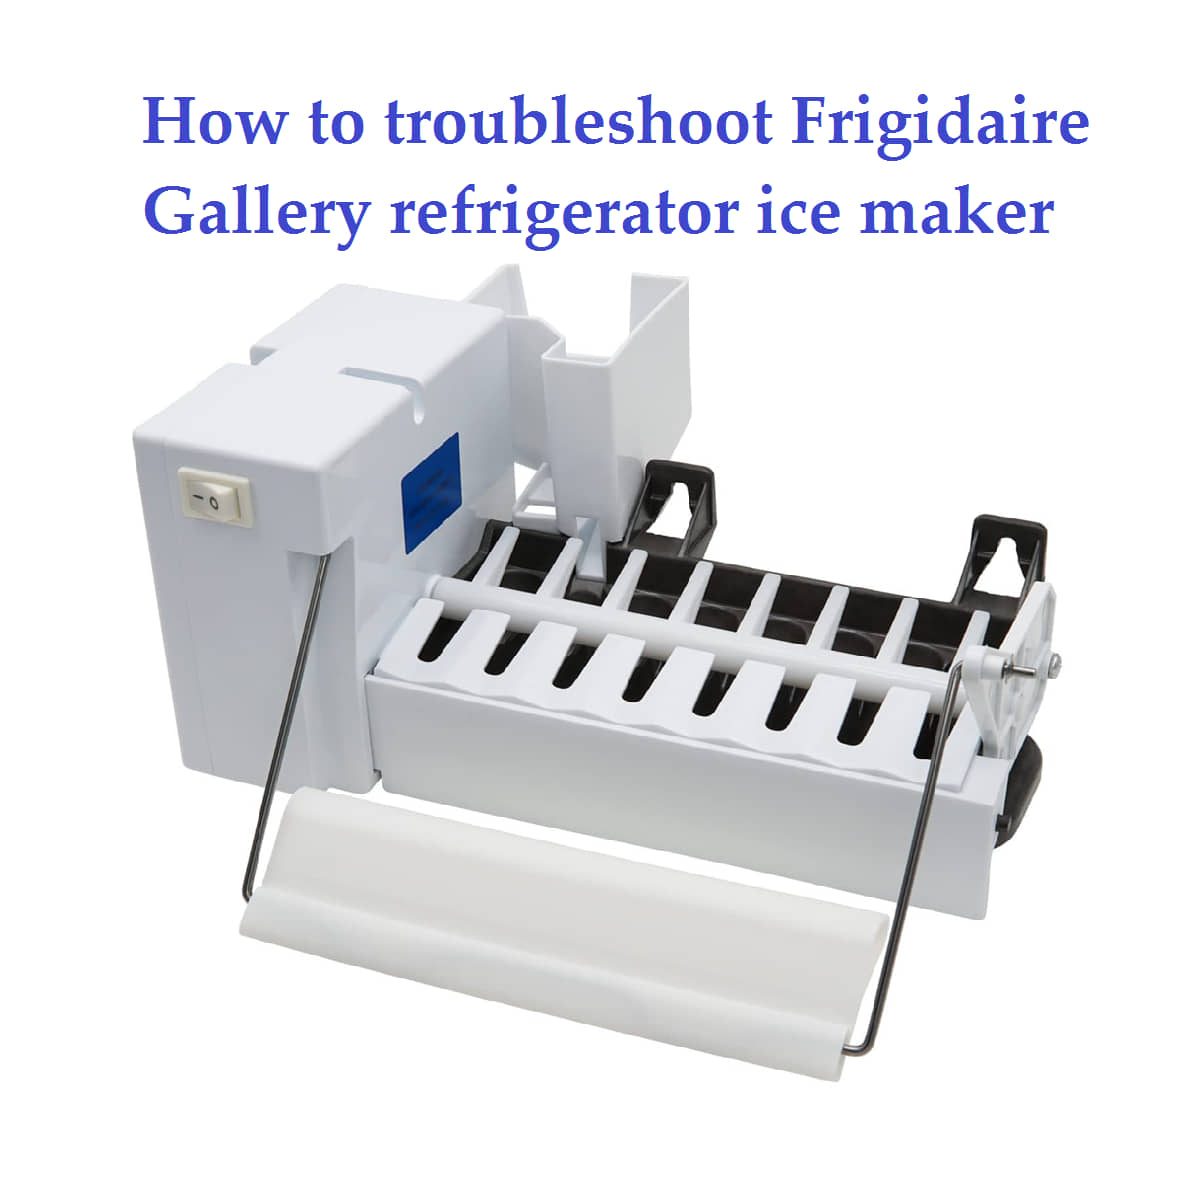 Frigidaire gallery refrigerator troubleshooting ice maker